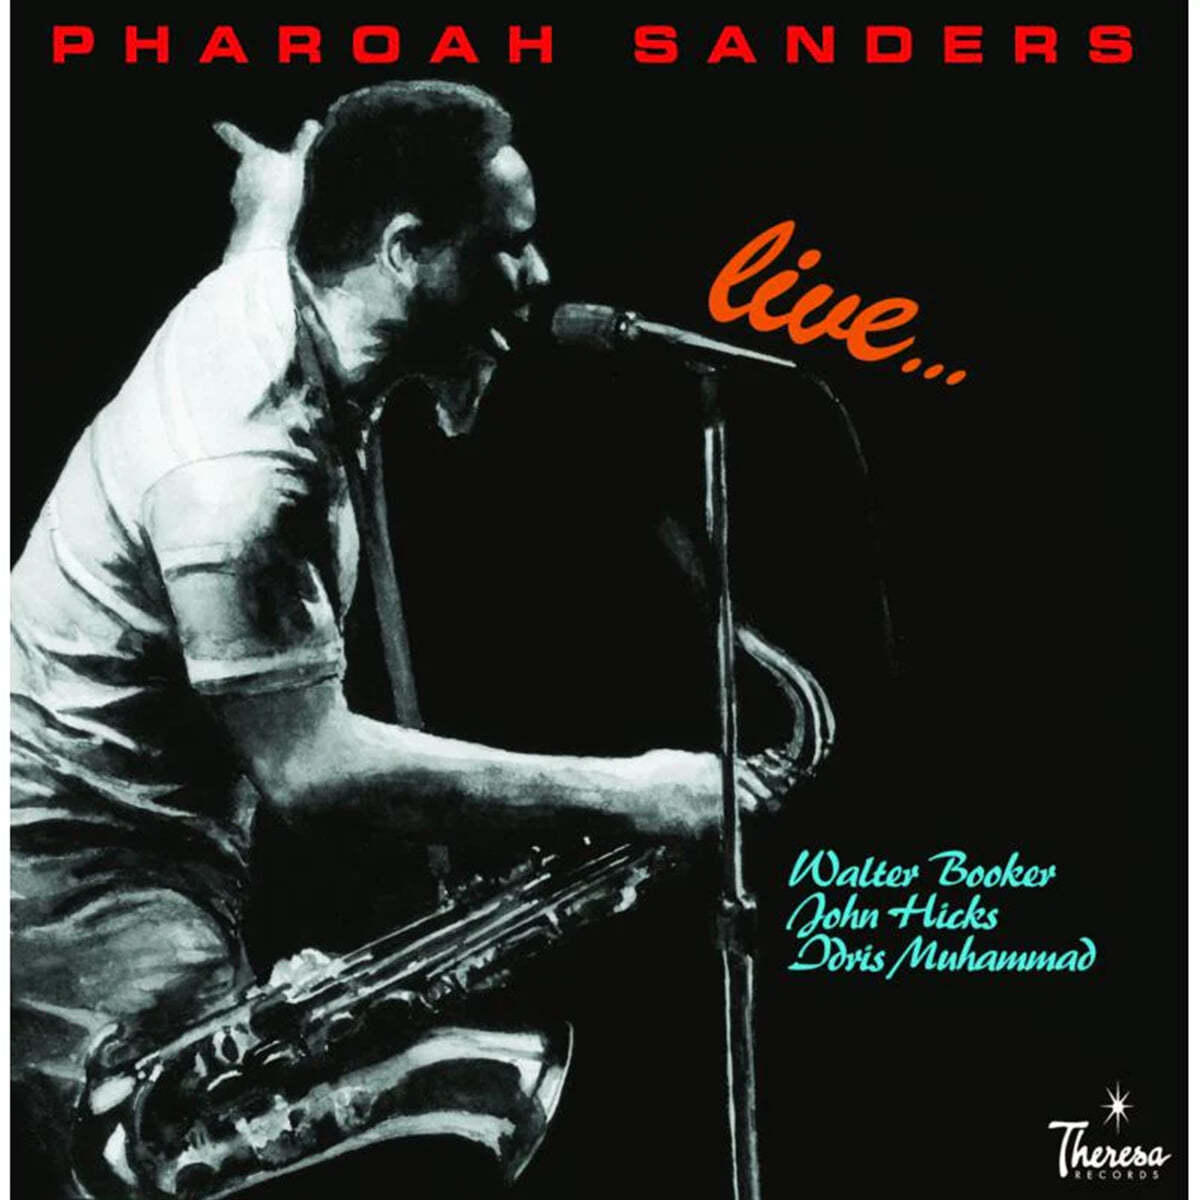 Pharaoh Sanders (파로아 샌더스) - Live... [2LP]